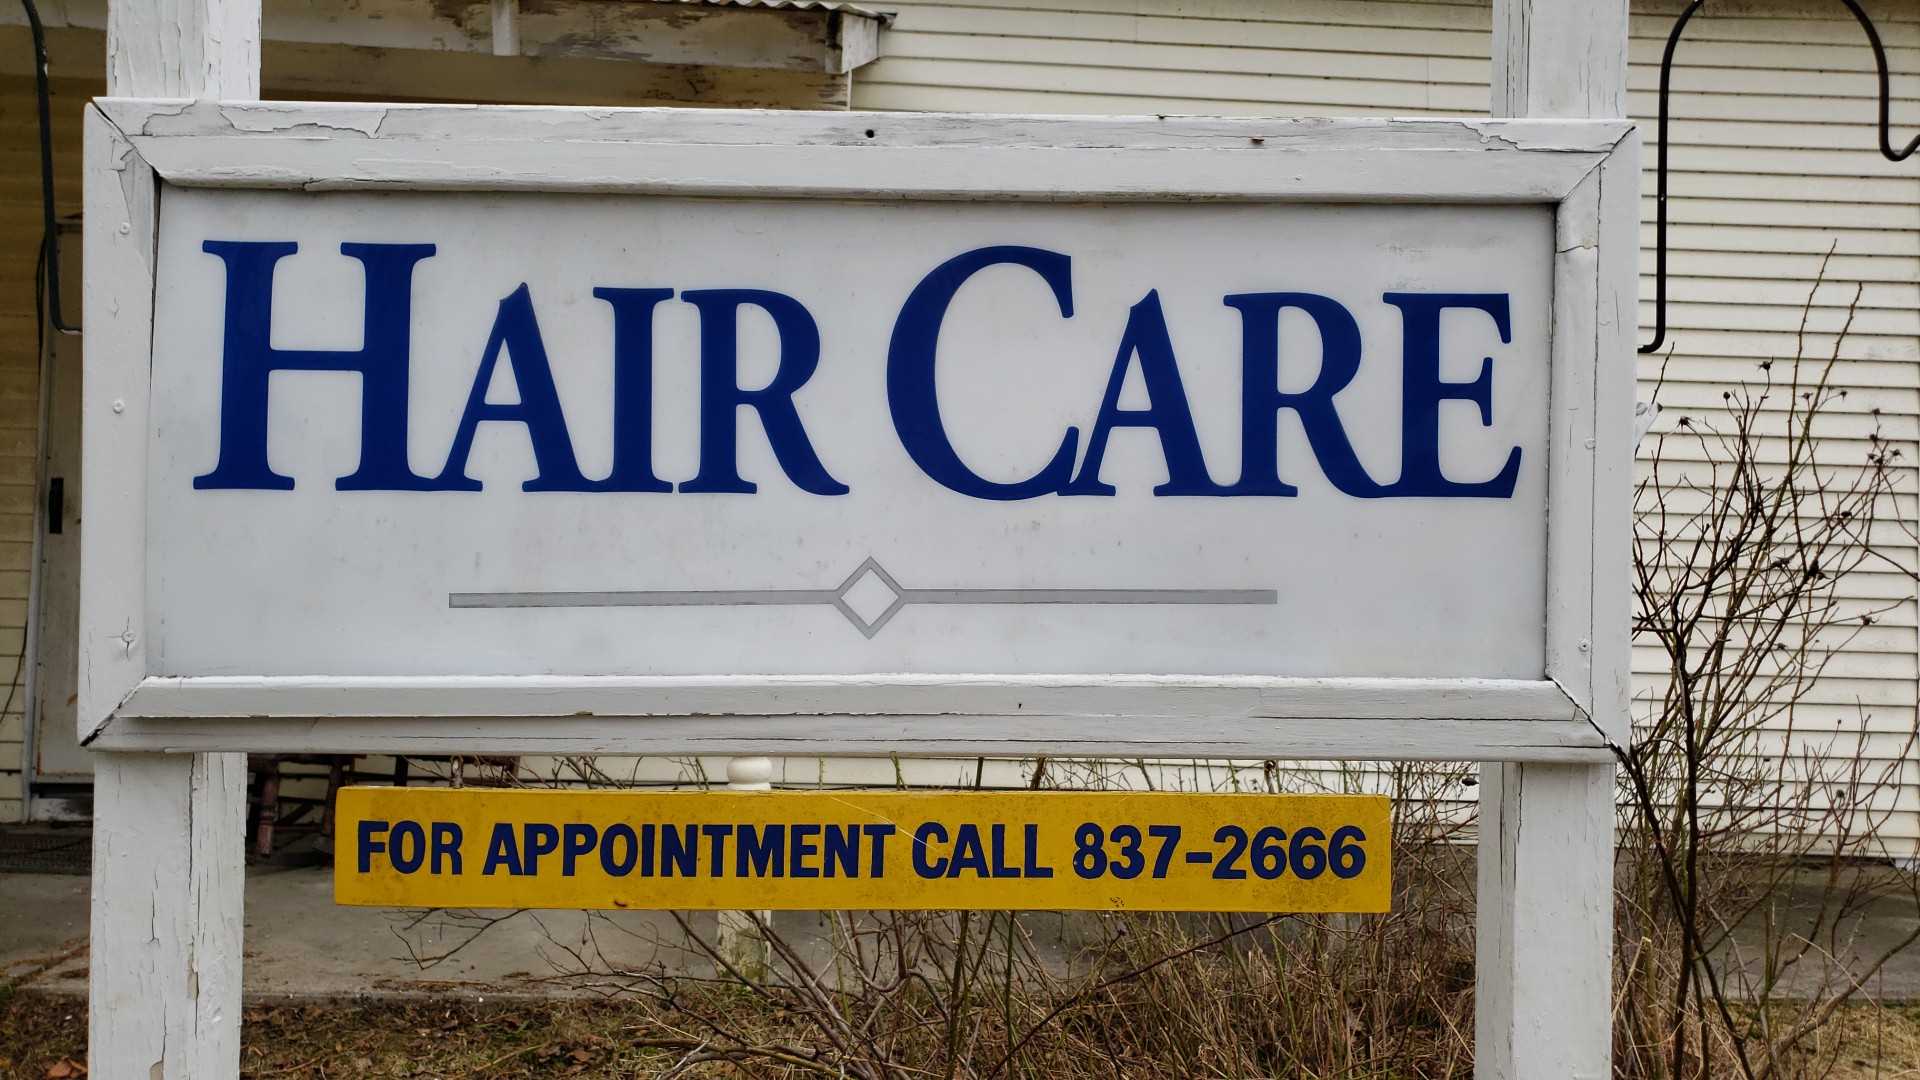 Haircare 394 Dalton Rd, Dalton New Hampshire 03598